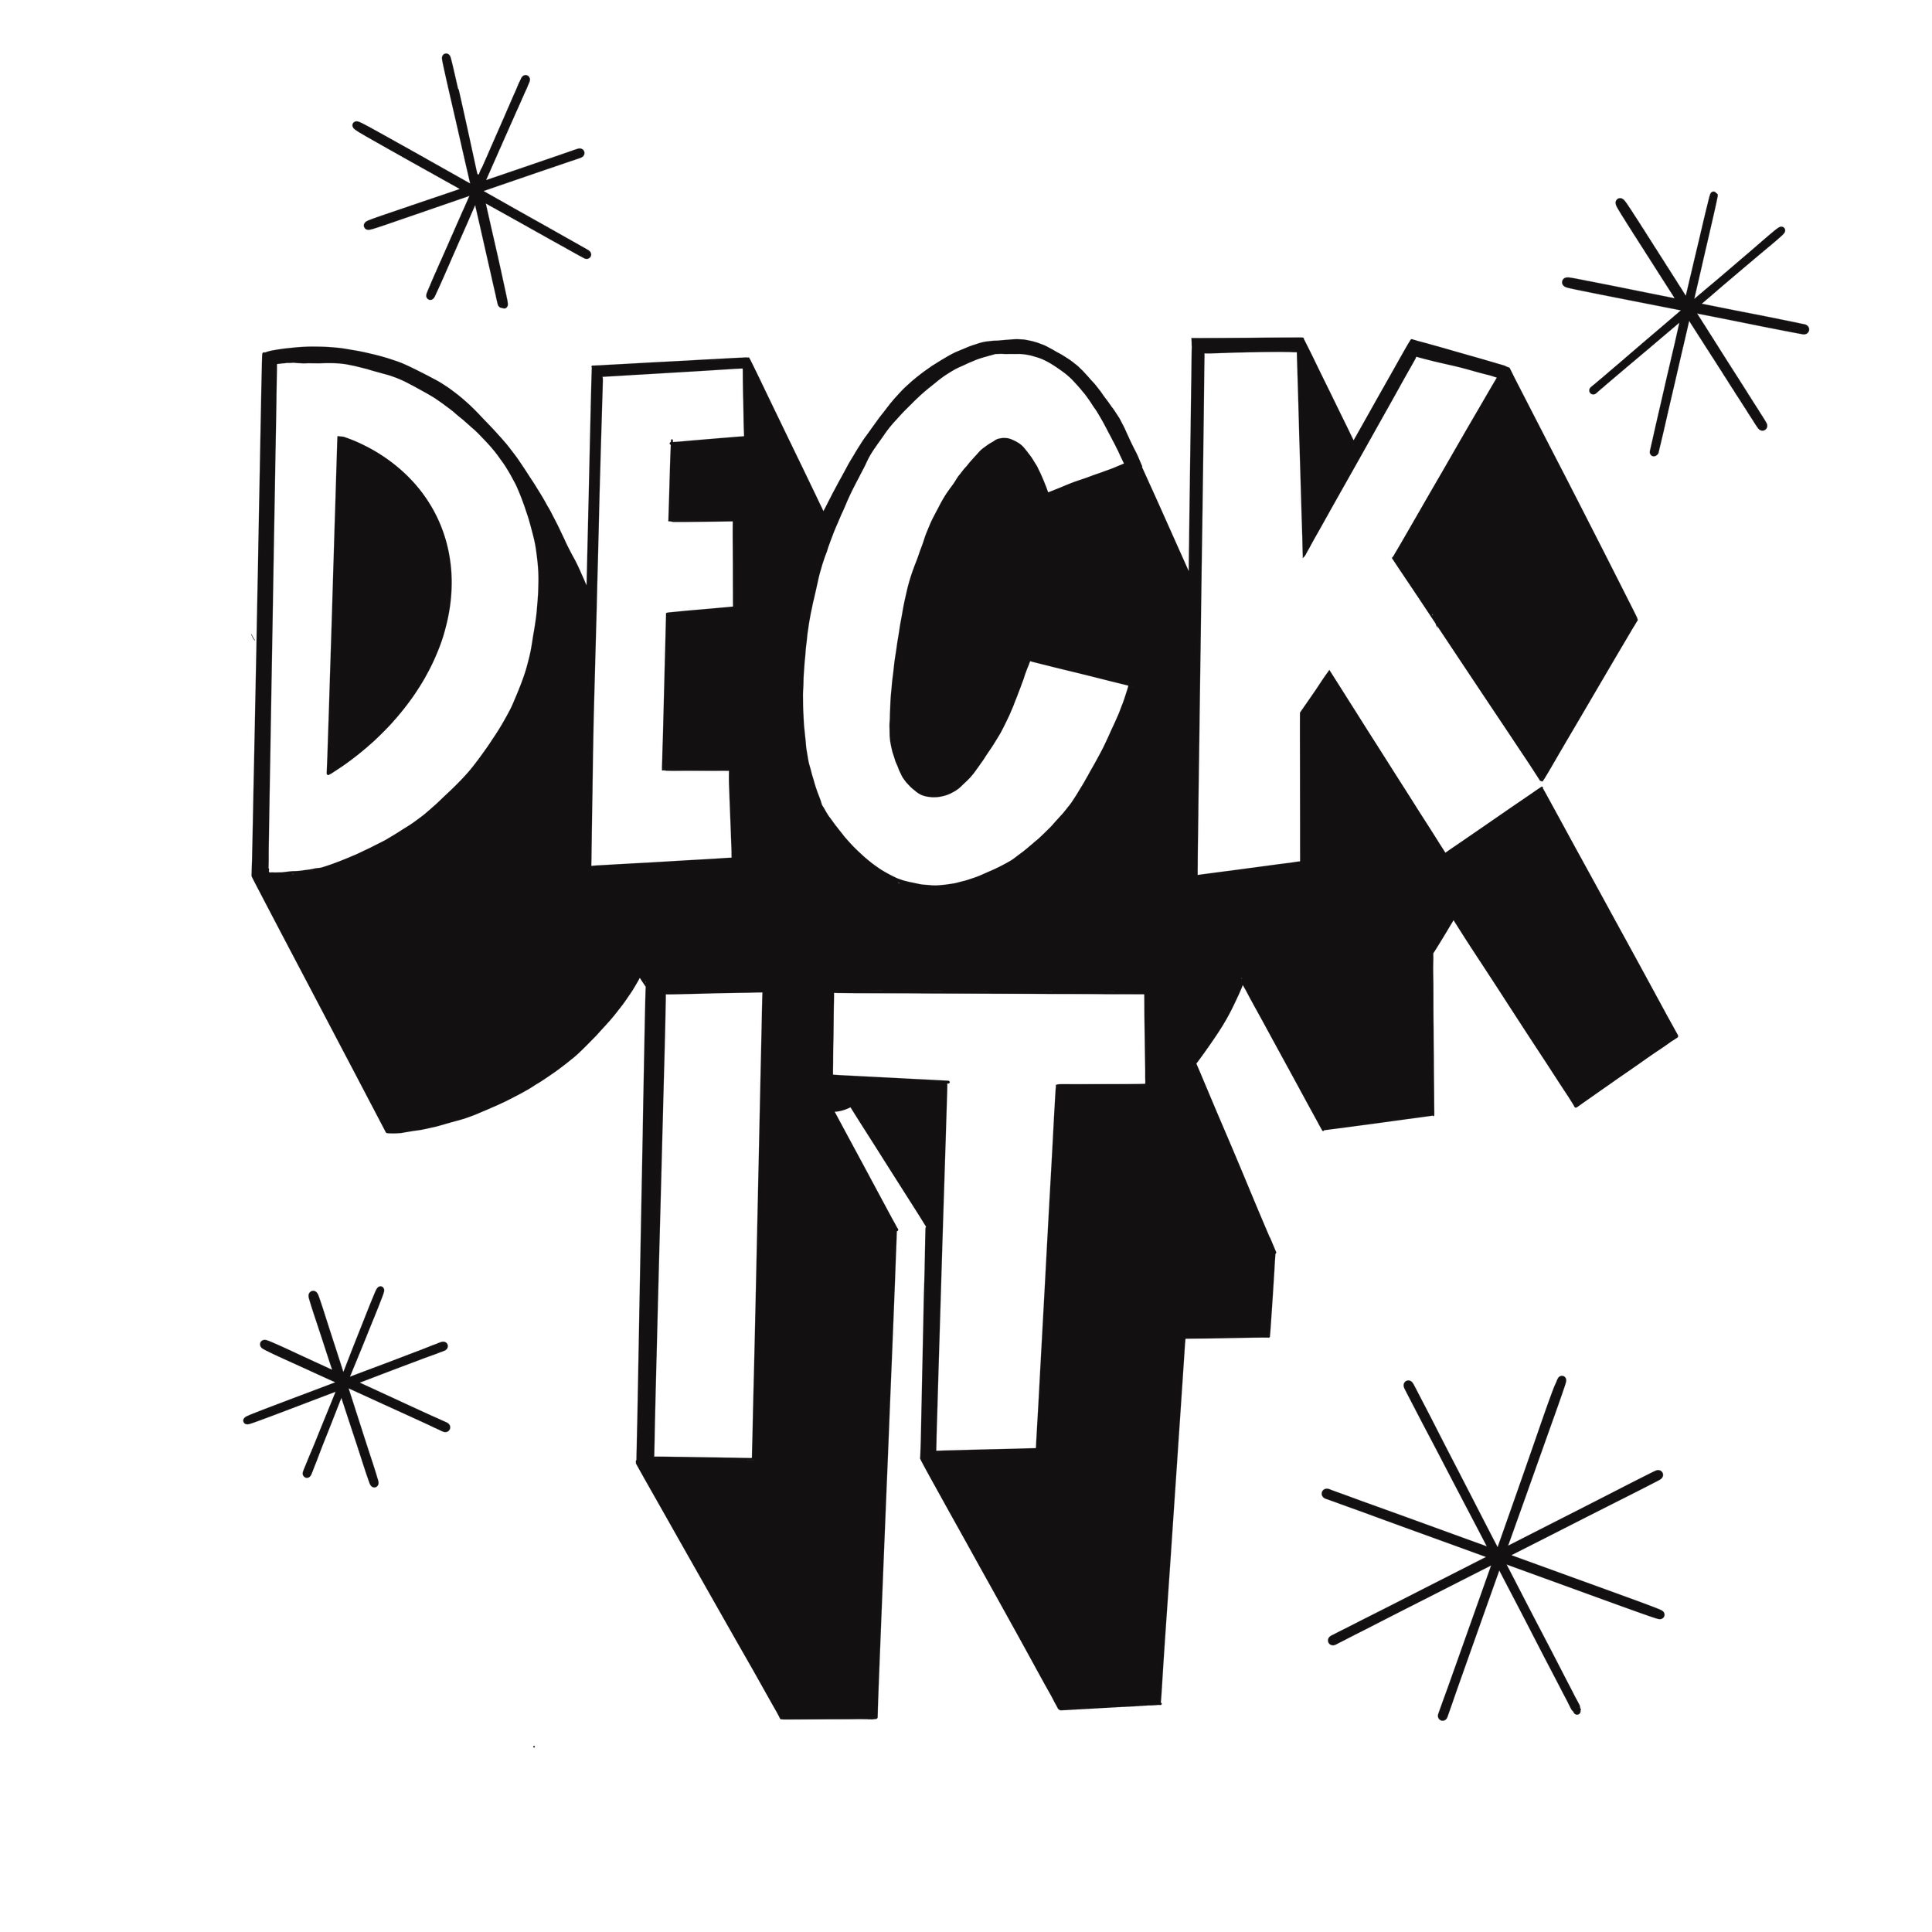 Deck_It 2.png